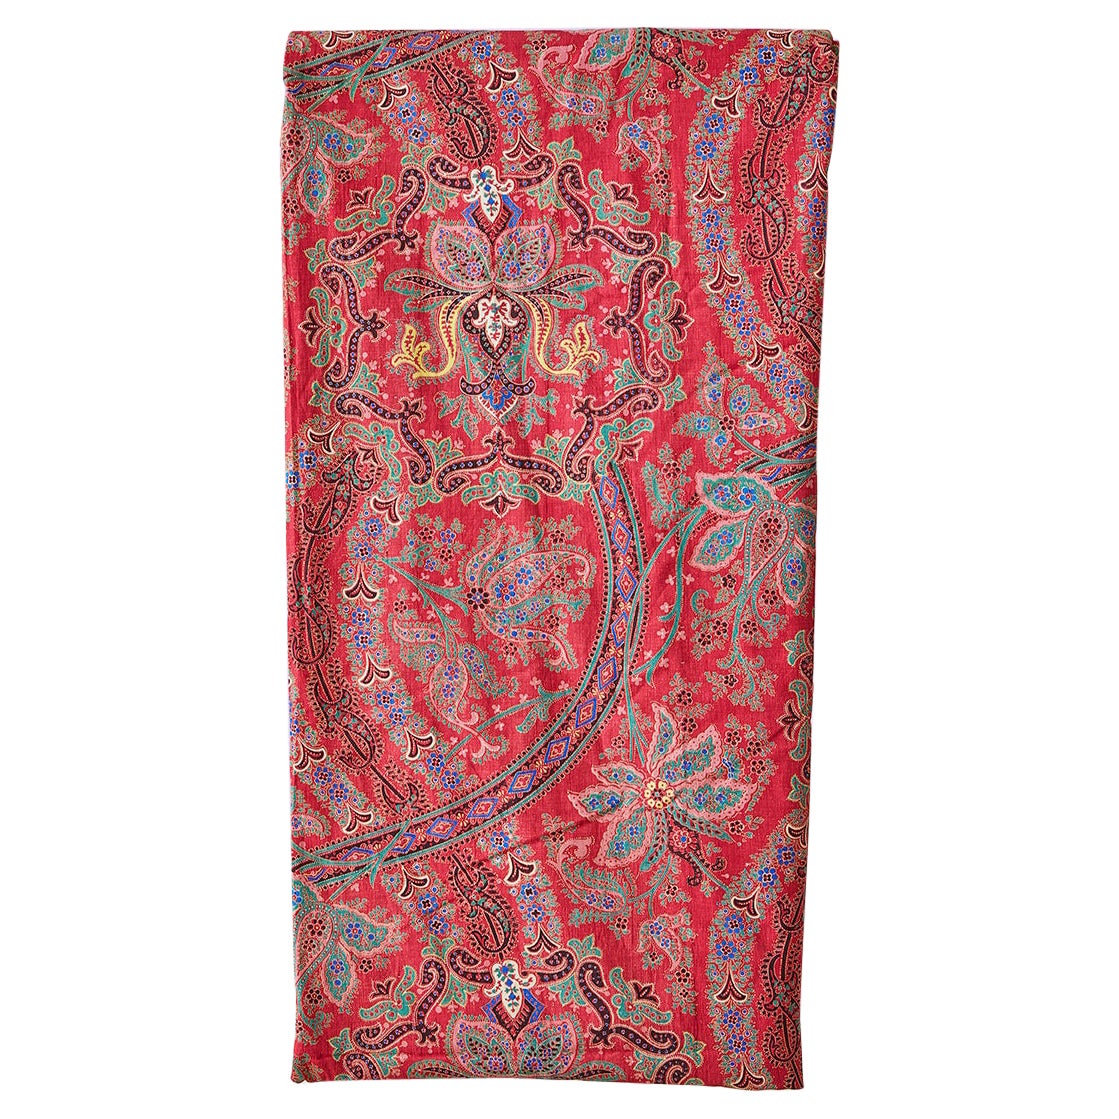 Großes antikes Paisley-Vorhang-Textil in Rot mit Muster, Frankreich, 19. Jahrhundert